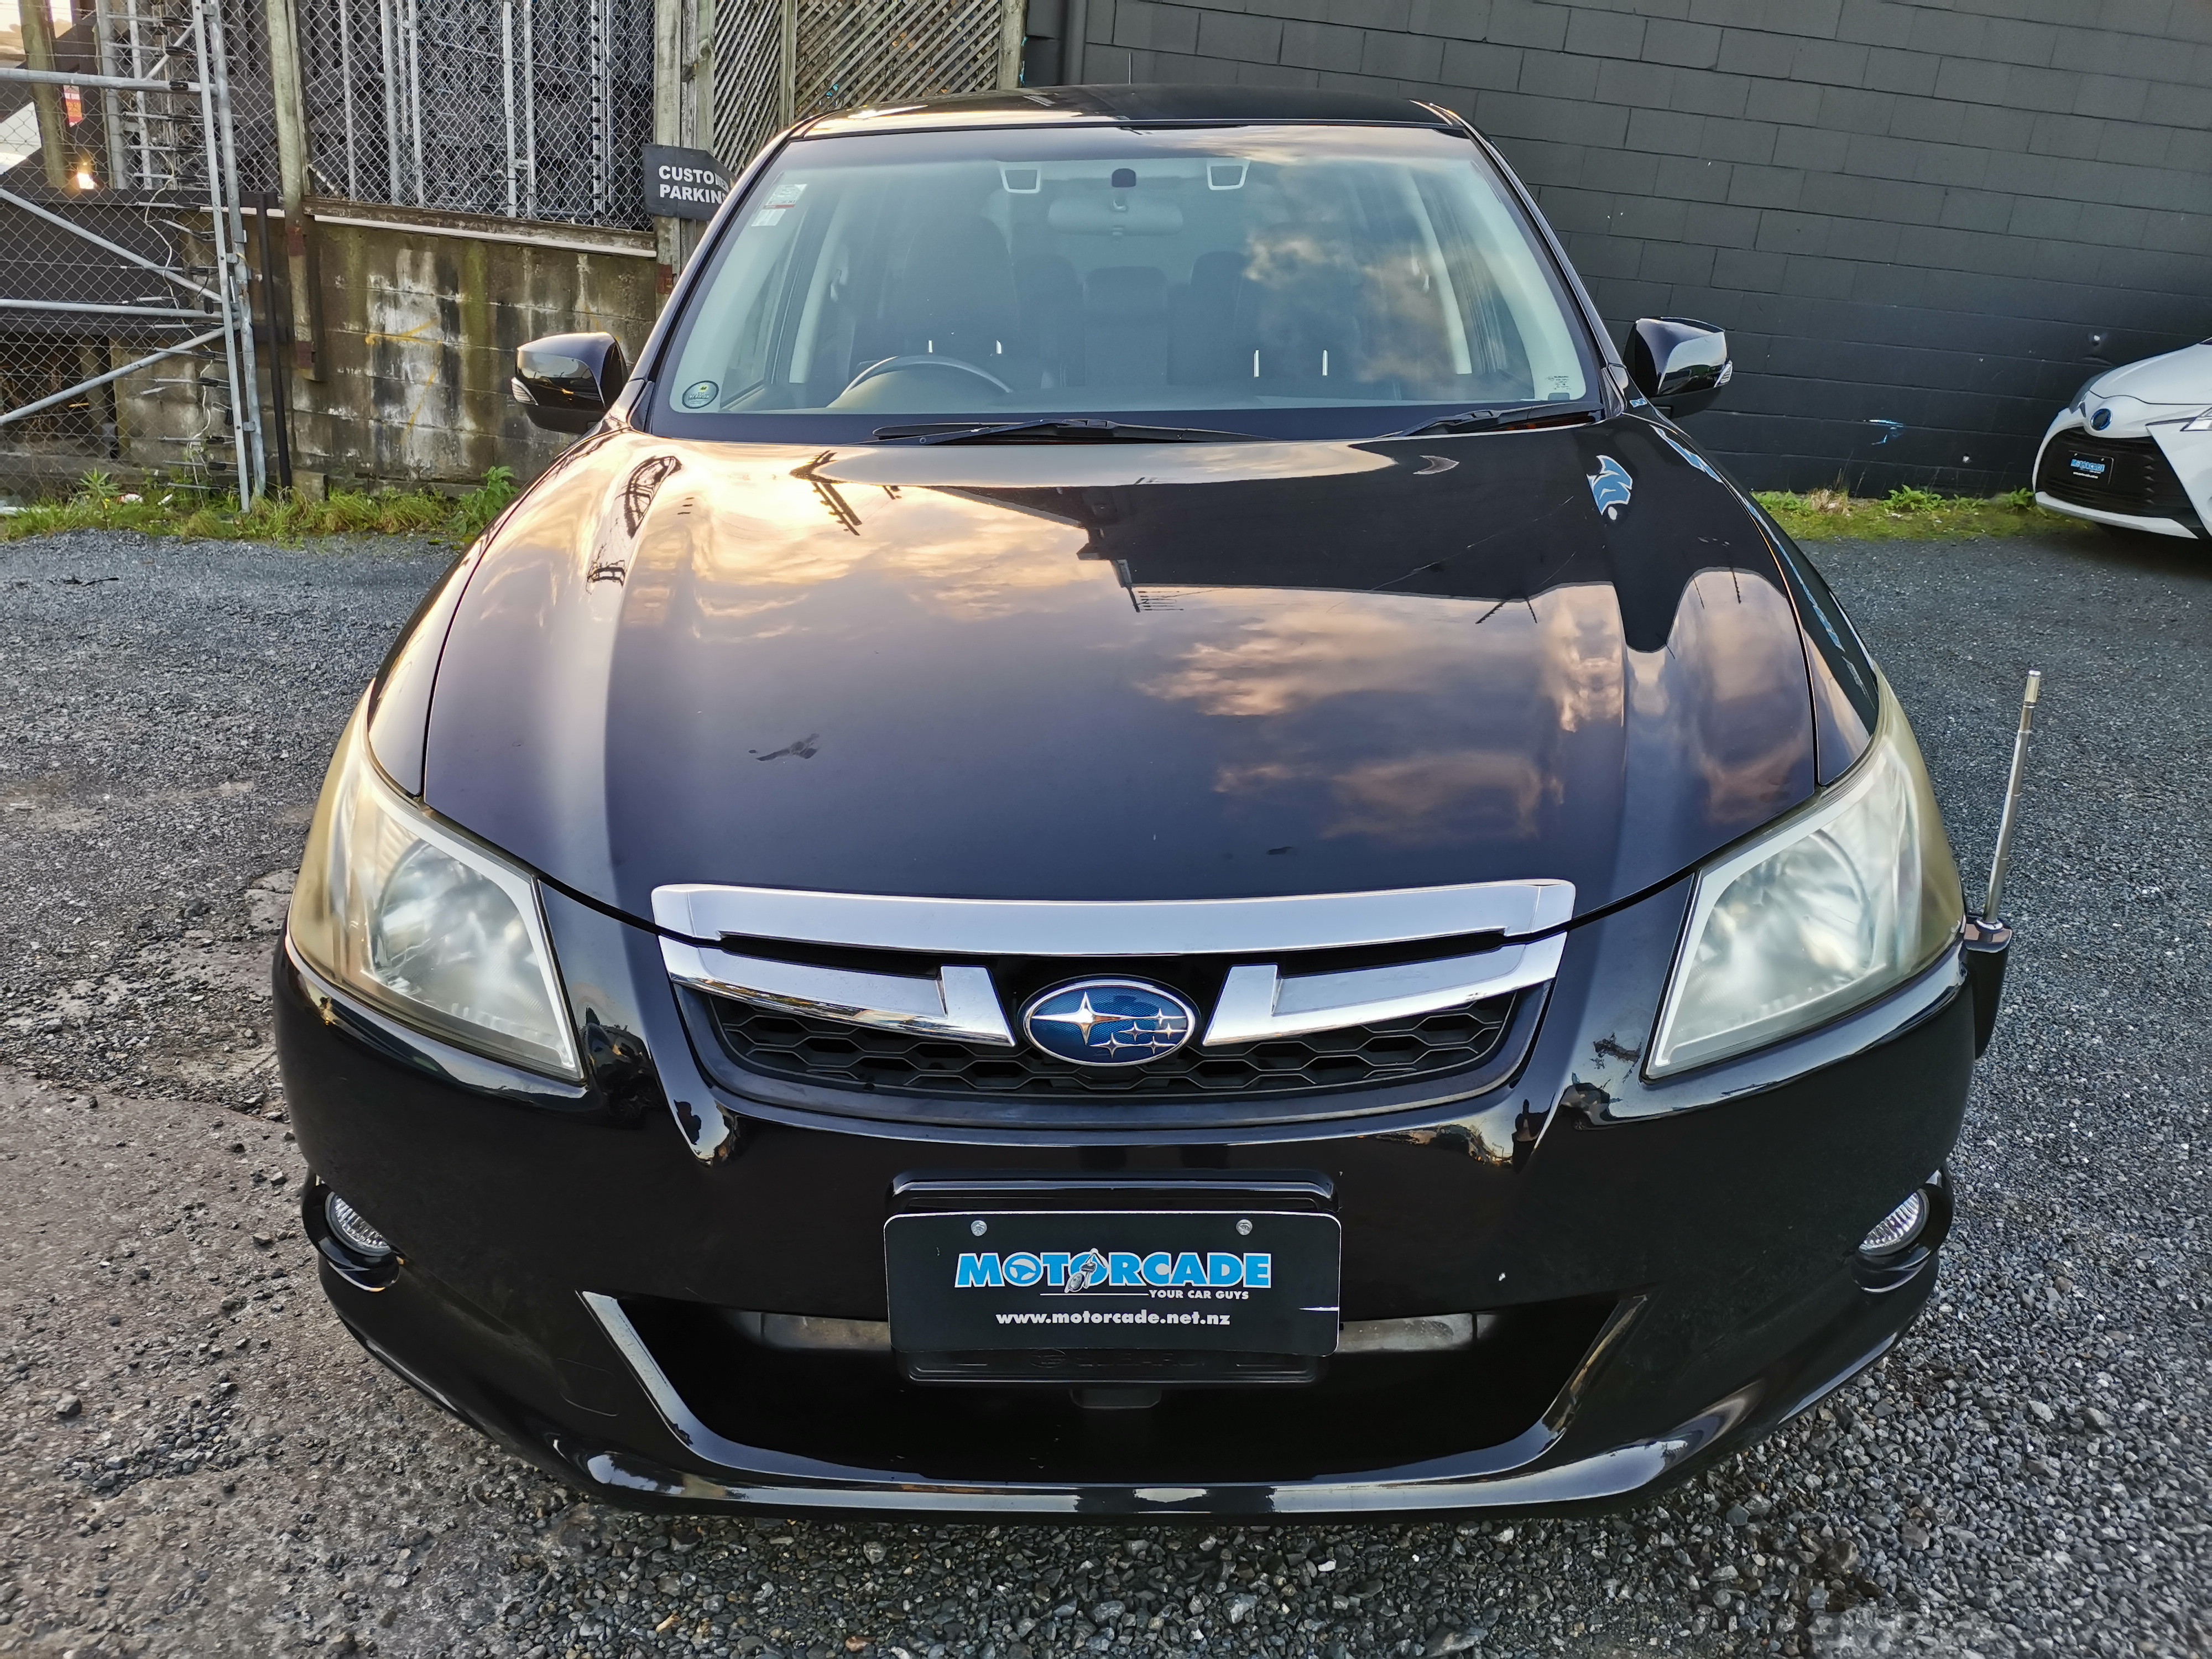 Subaru Exiga 2013 Image 3